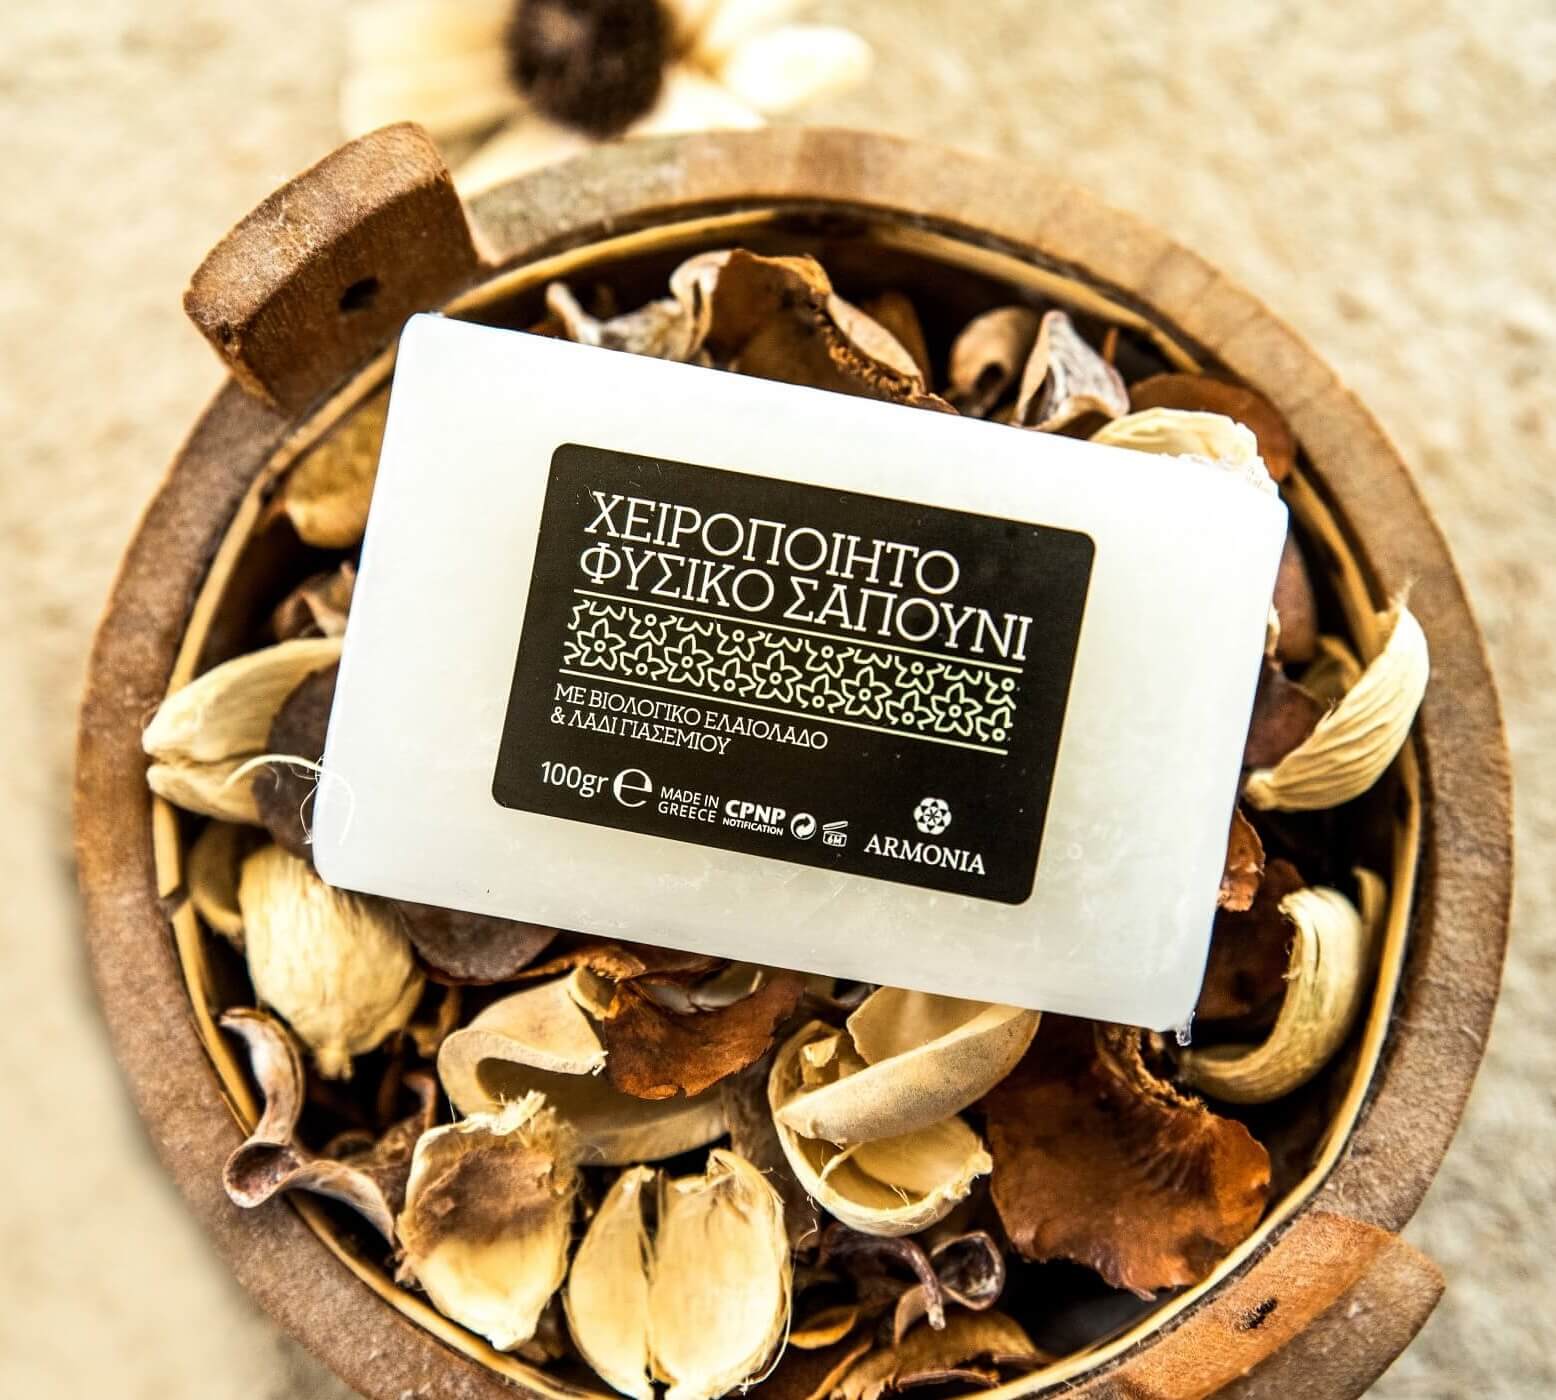 natural handmade organic olive oil soap 100 made in greece greek cosmetic jasmine cpnp 5